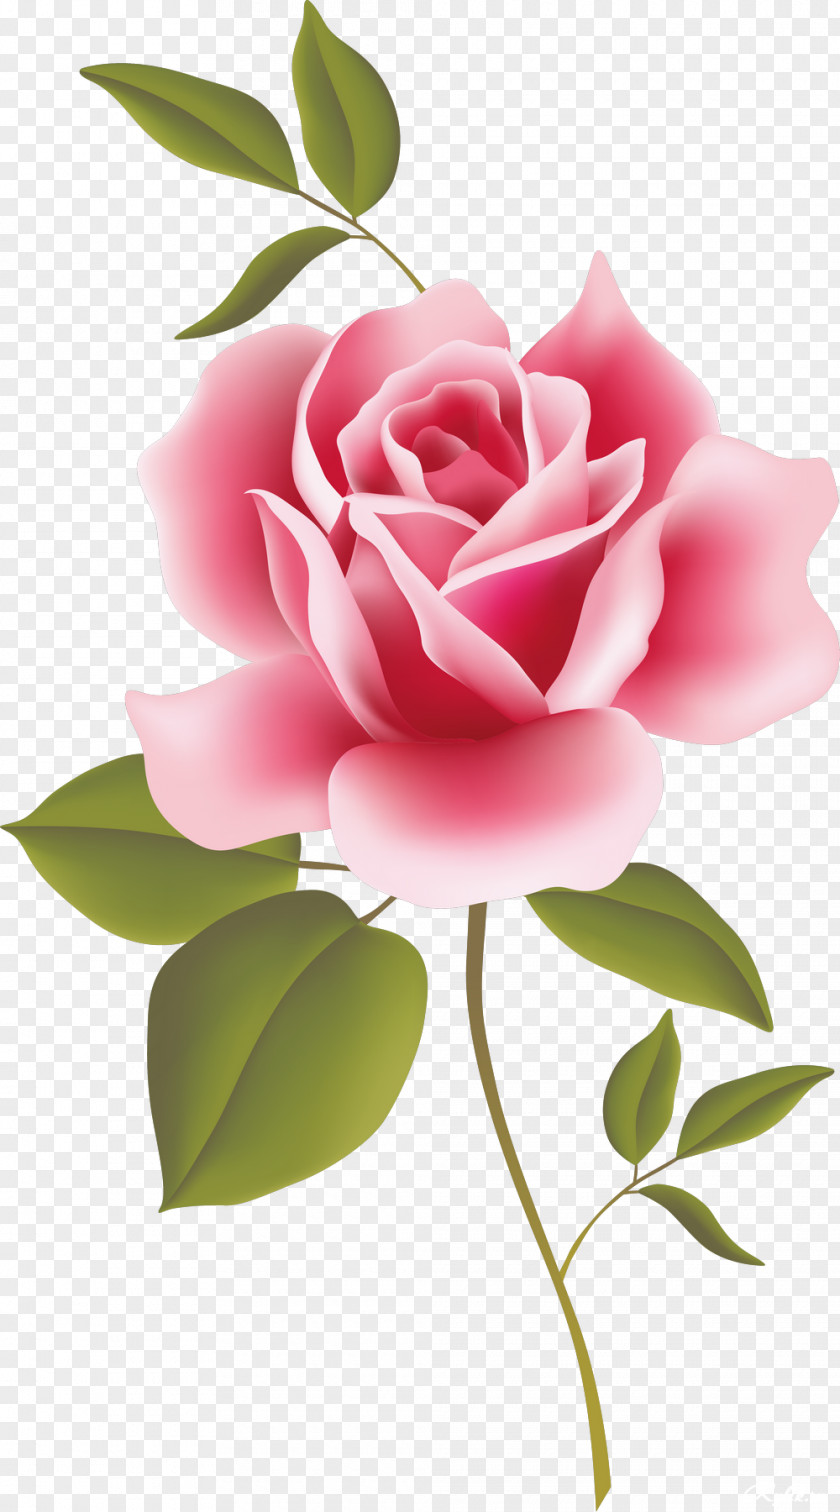 Rose Flower Vintage Roses: Beautiful Varieties For Home And Garden Desktop Wallpaper Clip Art PNG